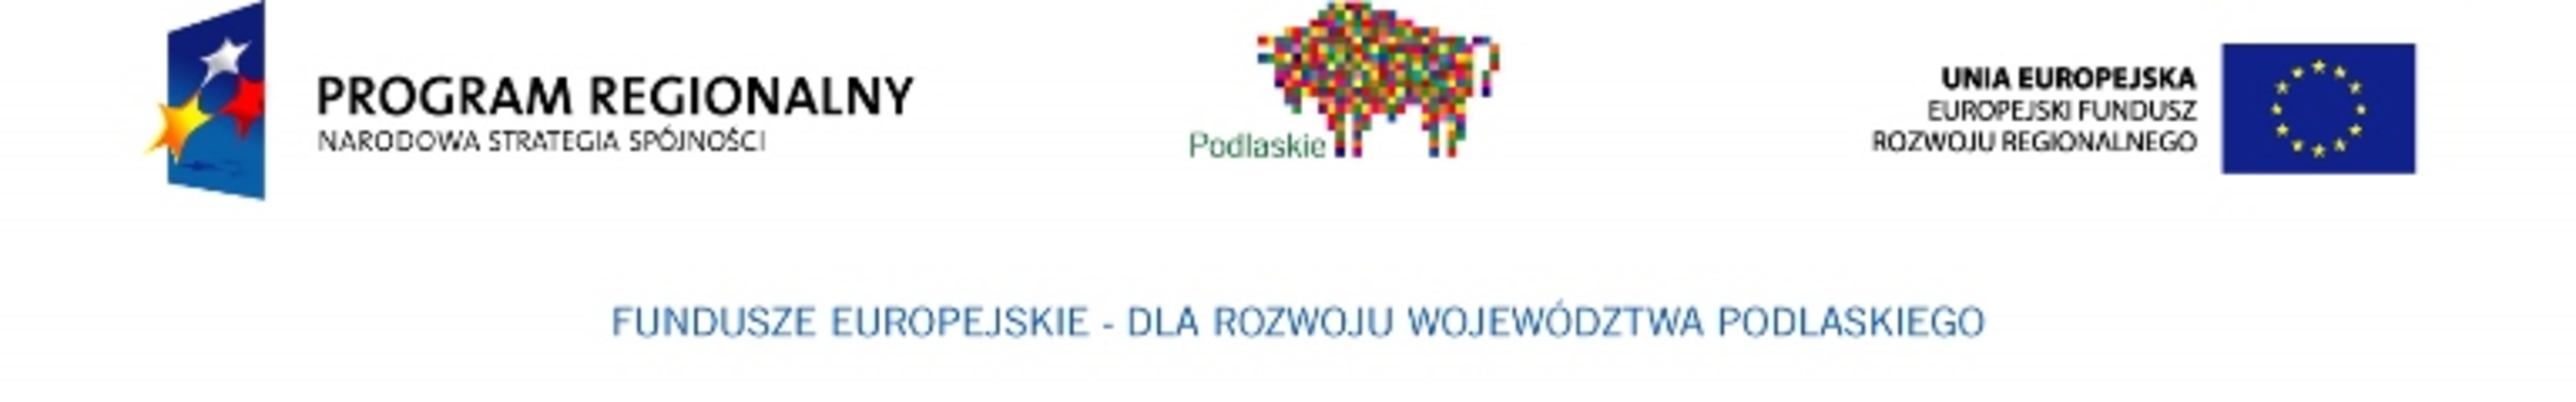 logo programu regionalnego